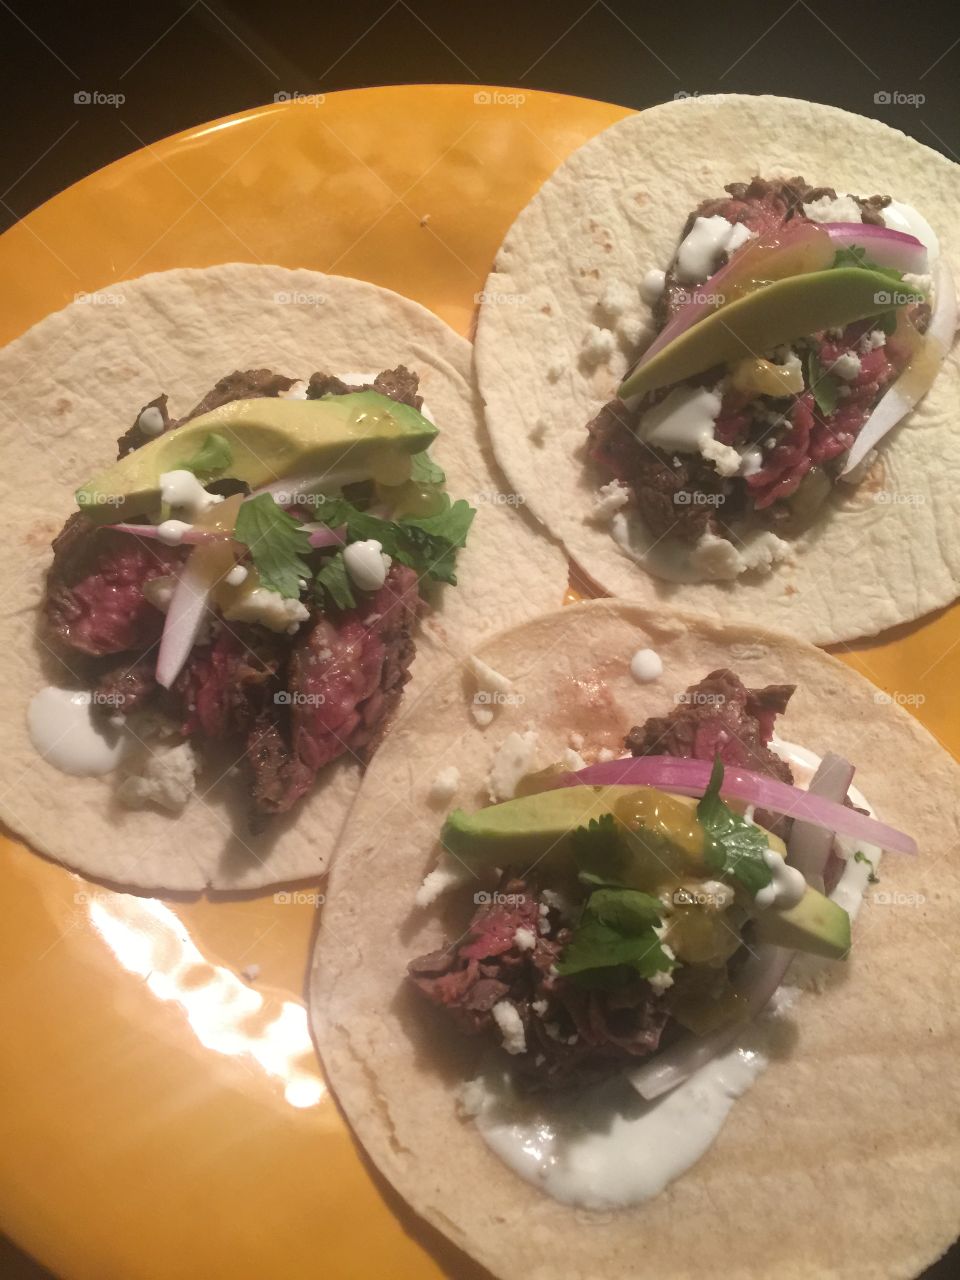 Steak Tacos